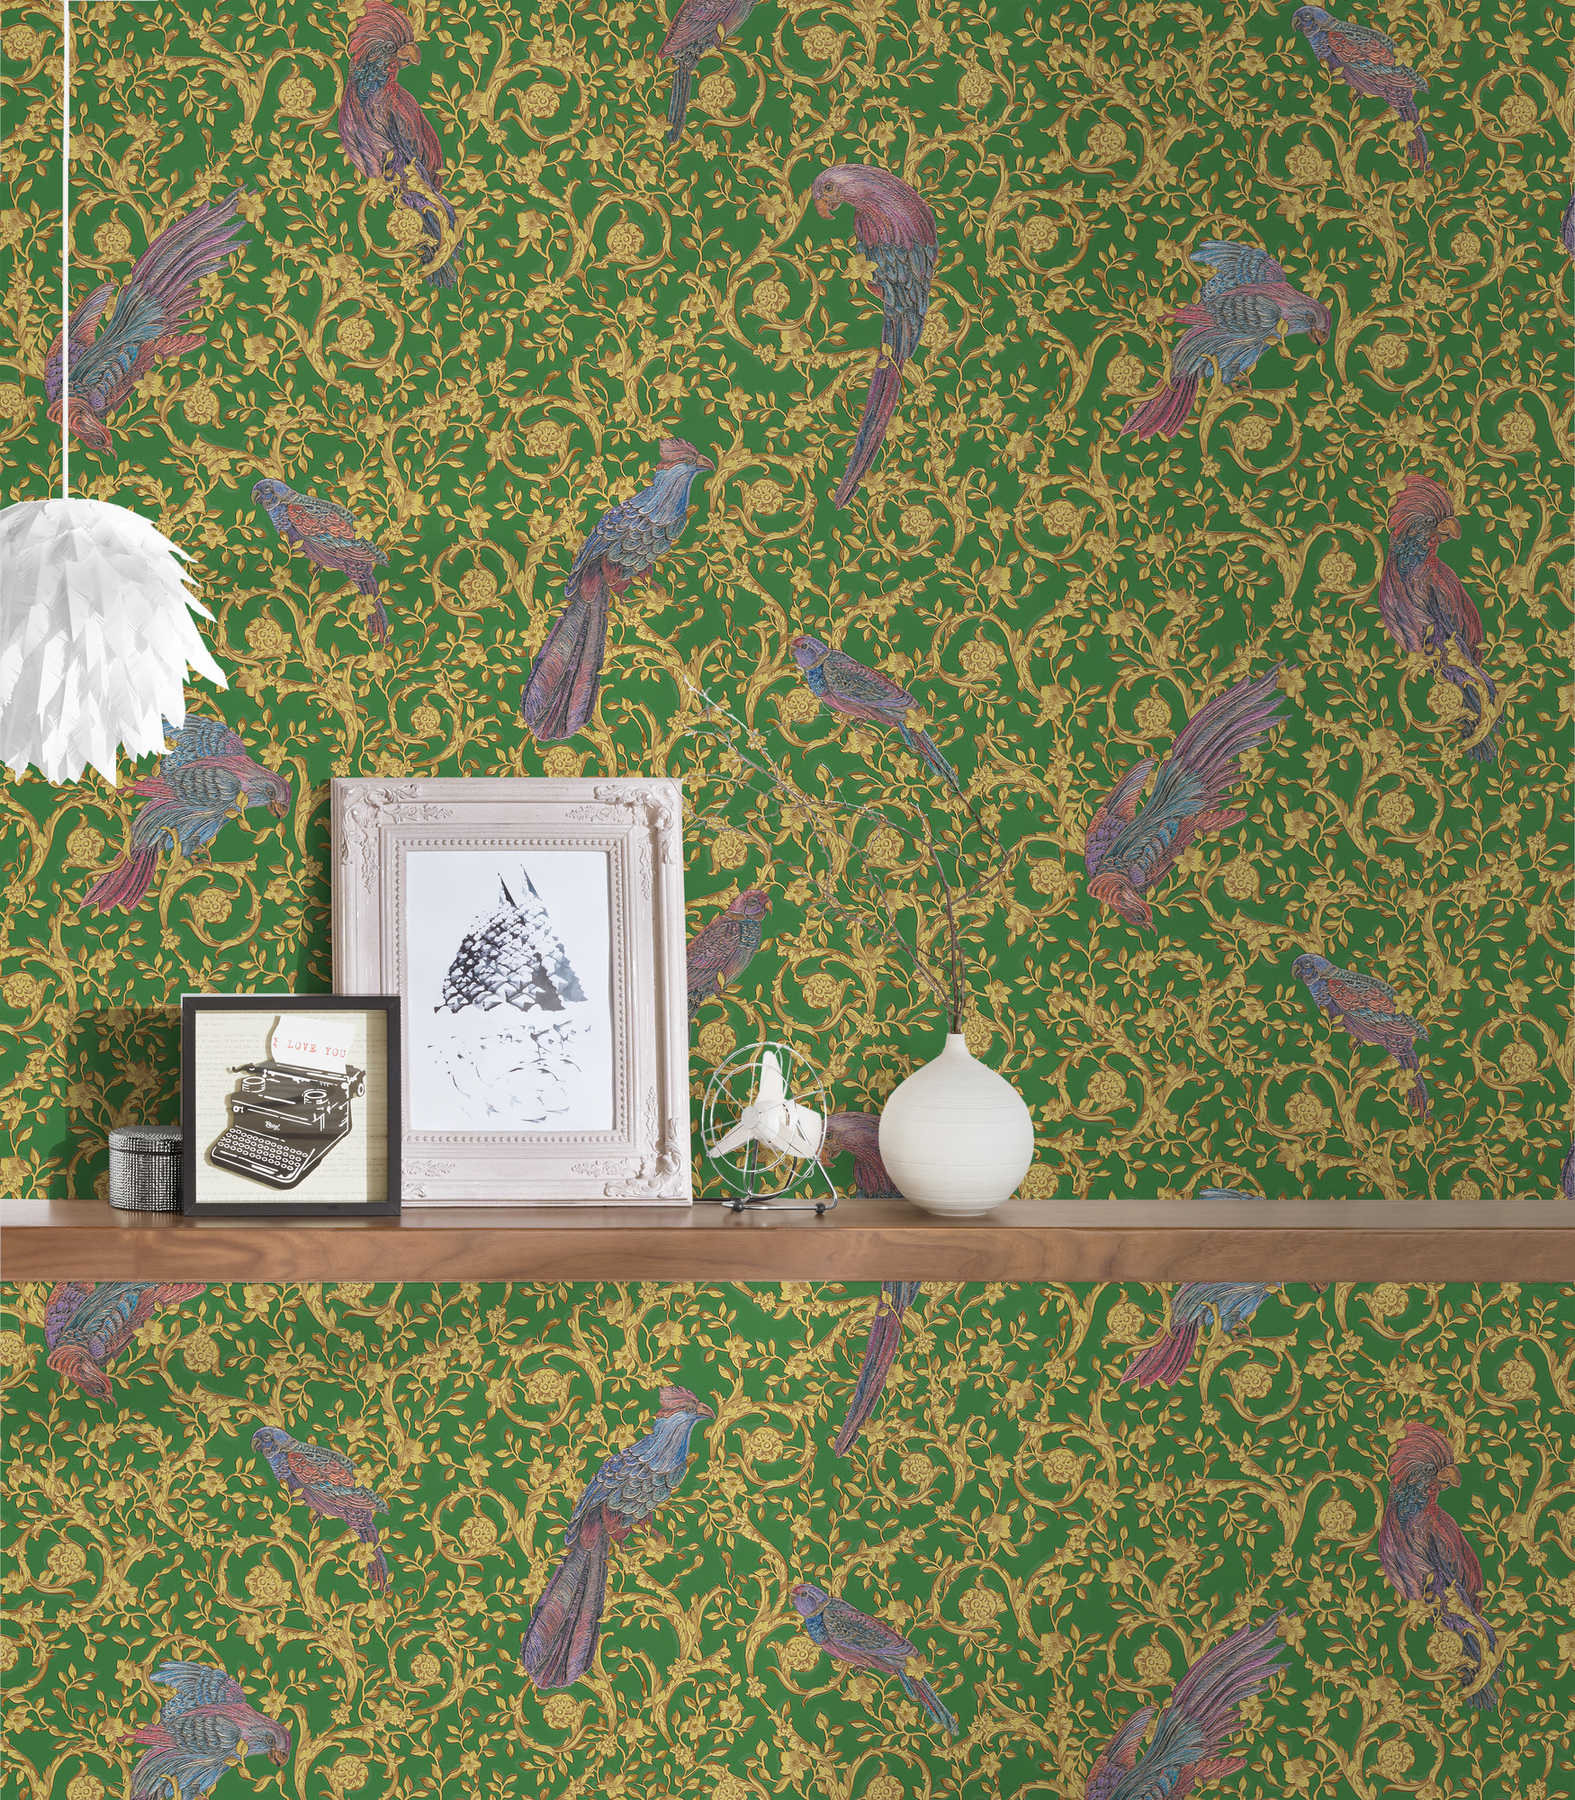             VERSACE Home wallpaper paradise birds & golden accents - gold, green, purple
        